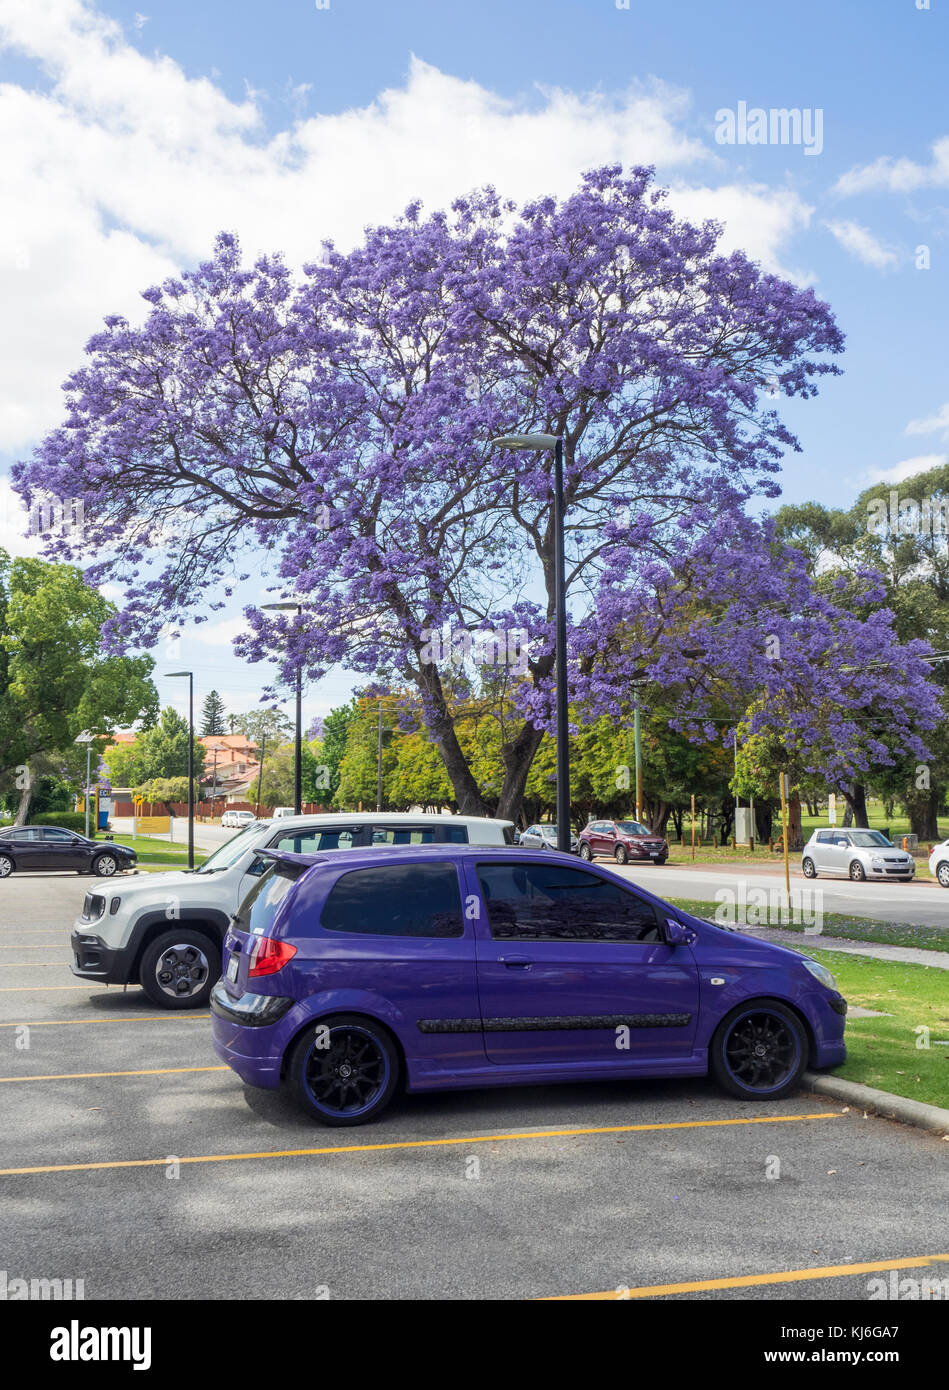 A purple Hyundai Getz and Jacaranda trees in full bloom in Perth Western Australia. Stock Photo